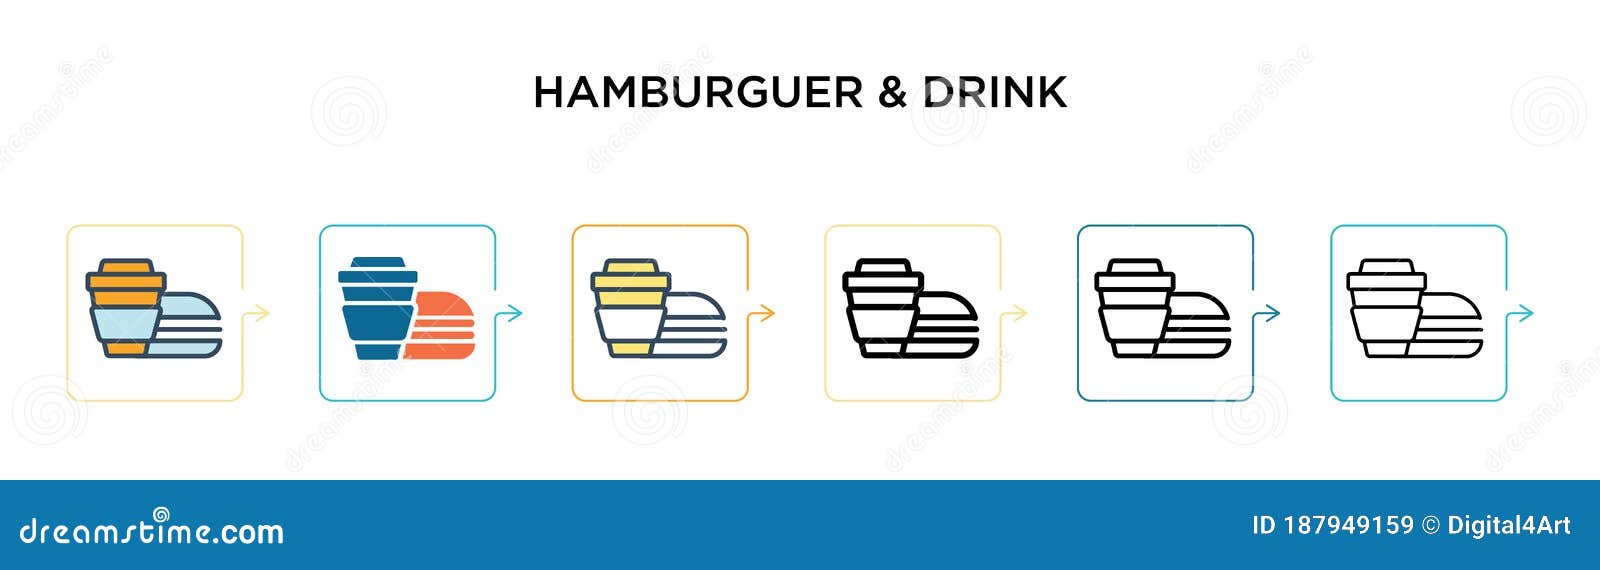 hamburguer & drink  icon in 6 different modern styles. black, two colored hamburguer & drink icons ed in filled,